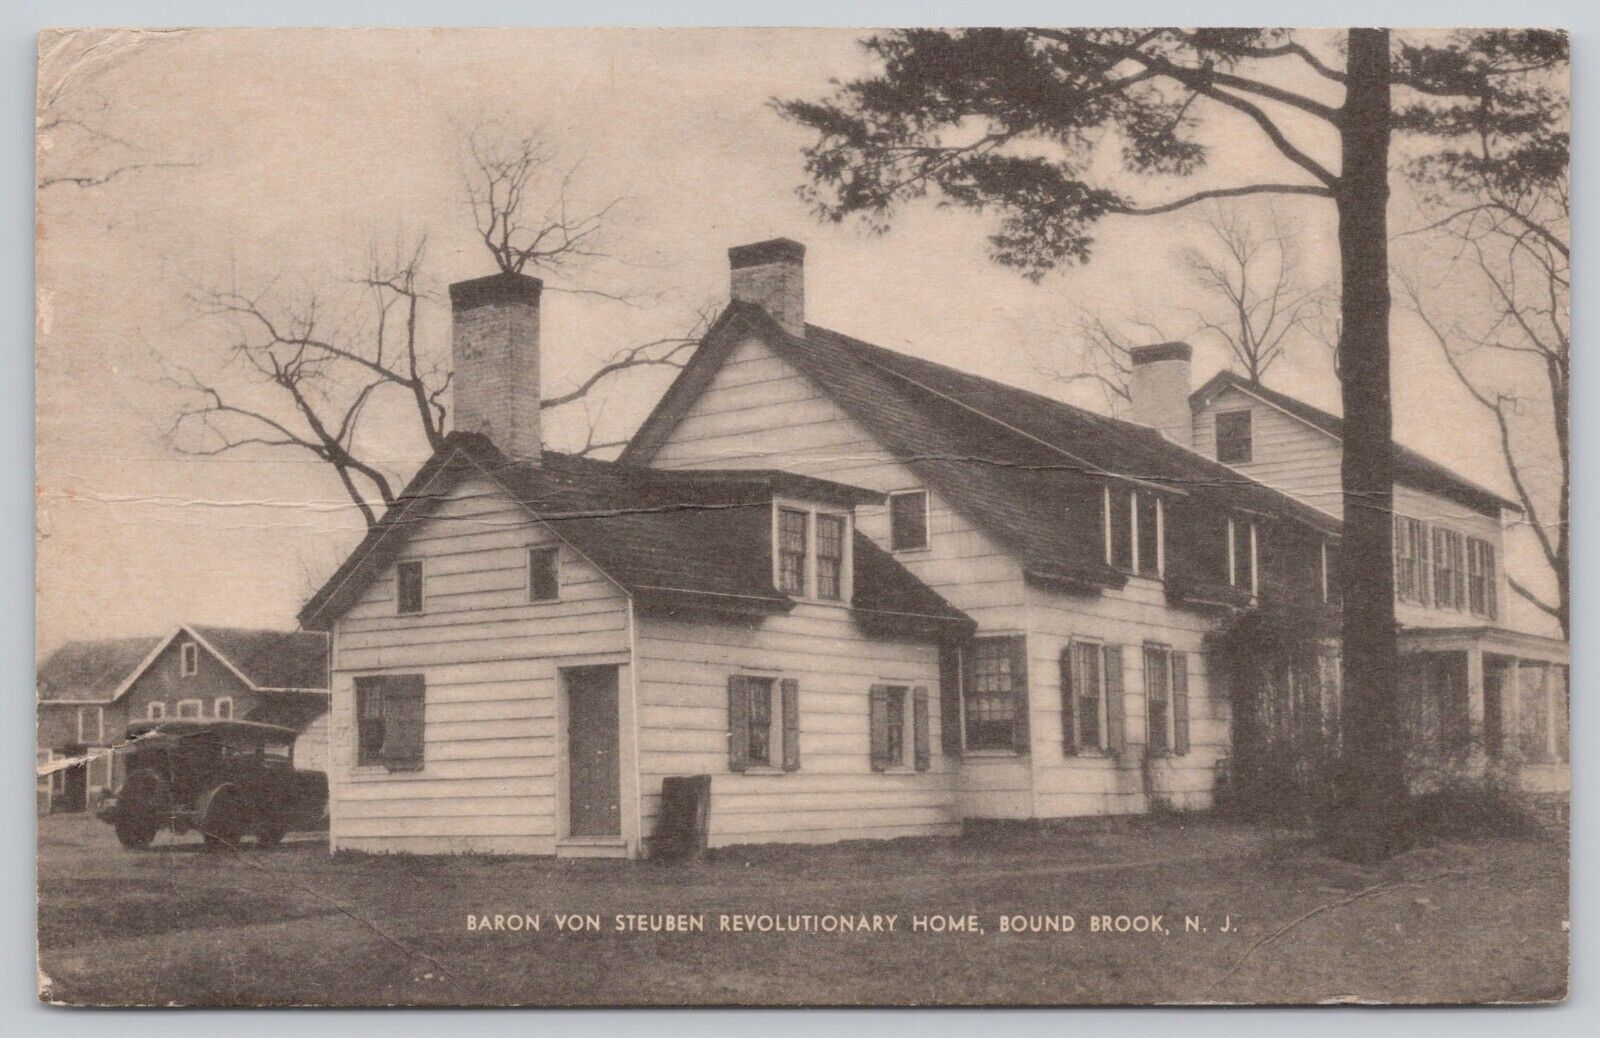 Baron Von Steuben Revolutionary Home Round Brook NJ Vintage Lithograph Postcard